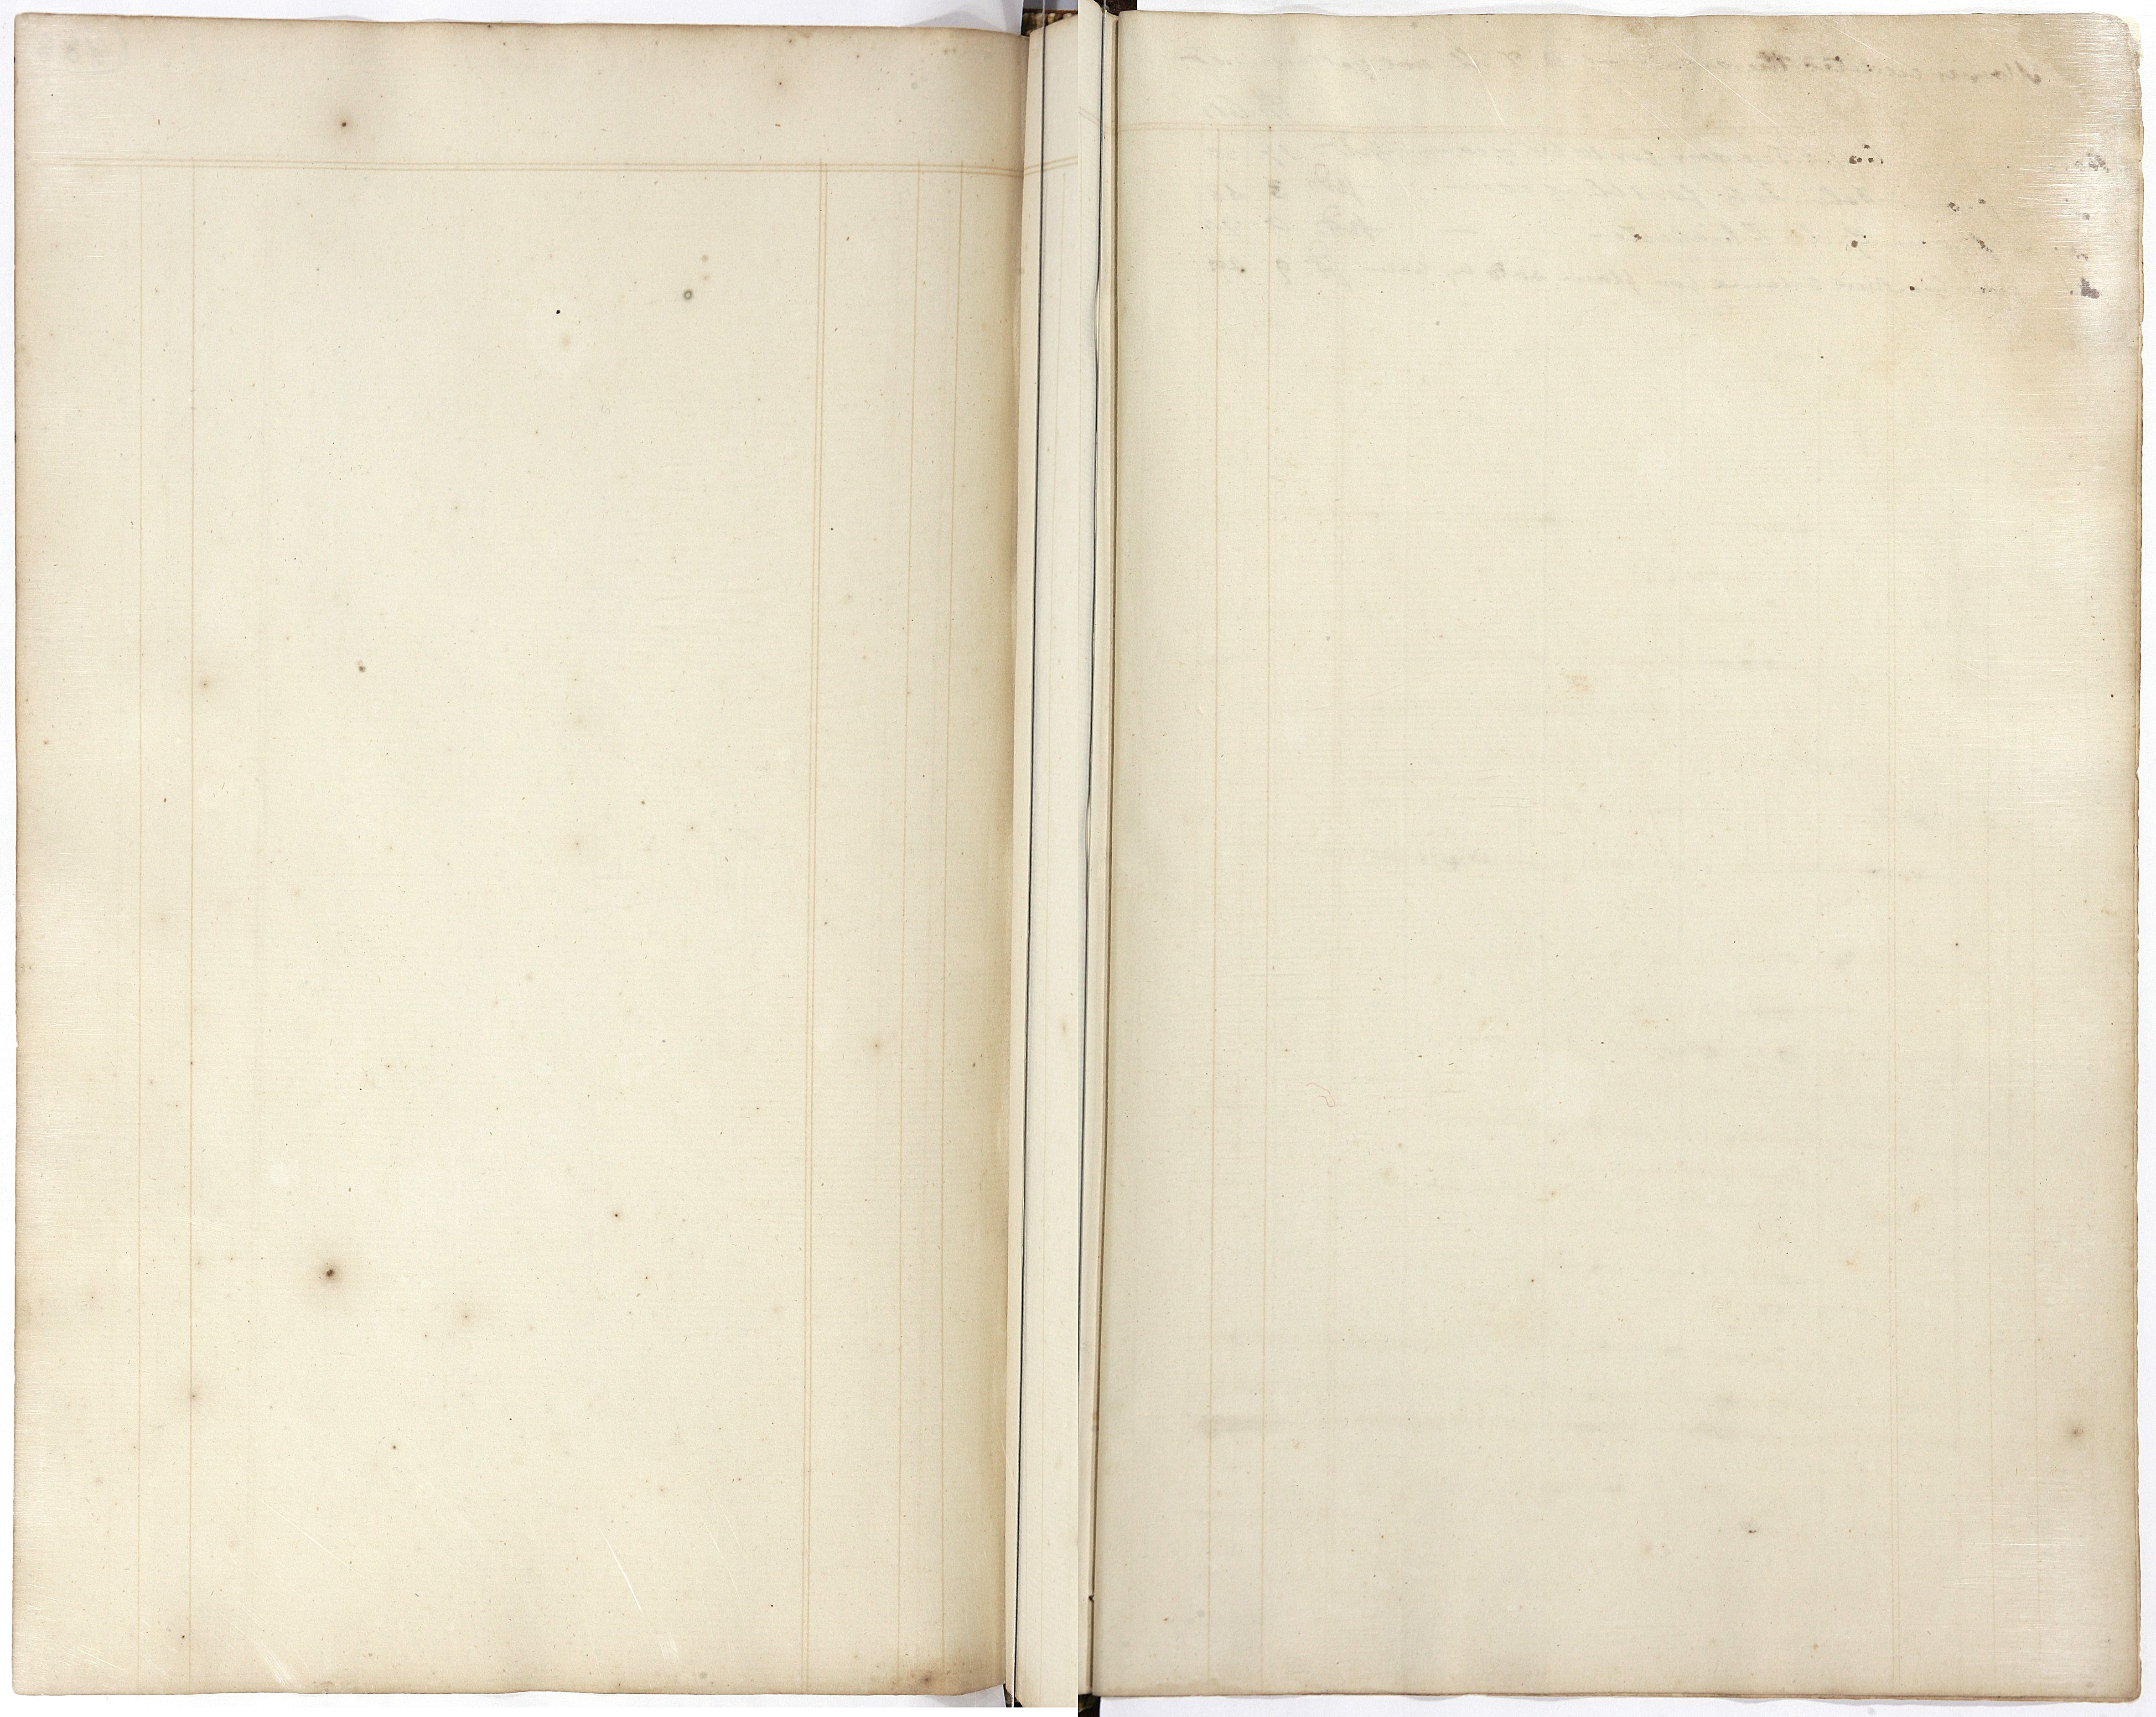 Image of Folio 189 (transcription below)